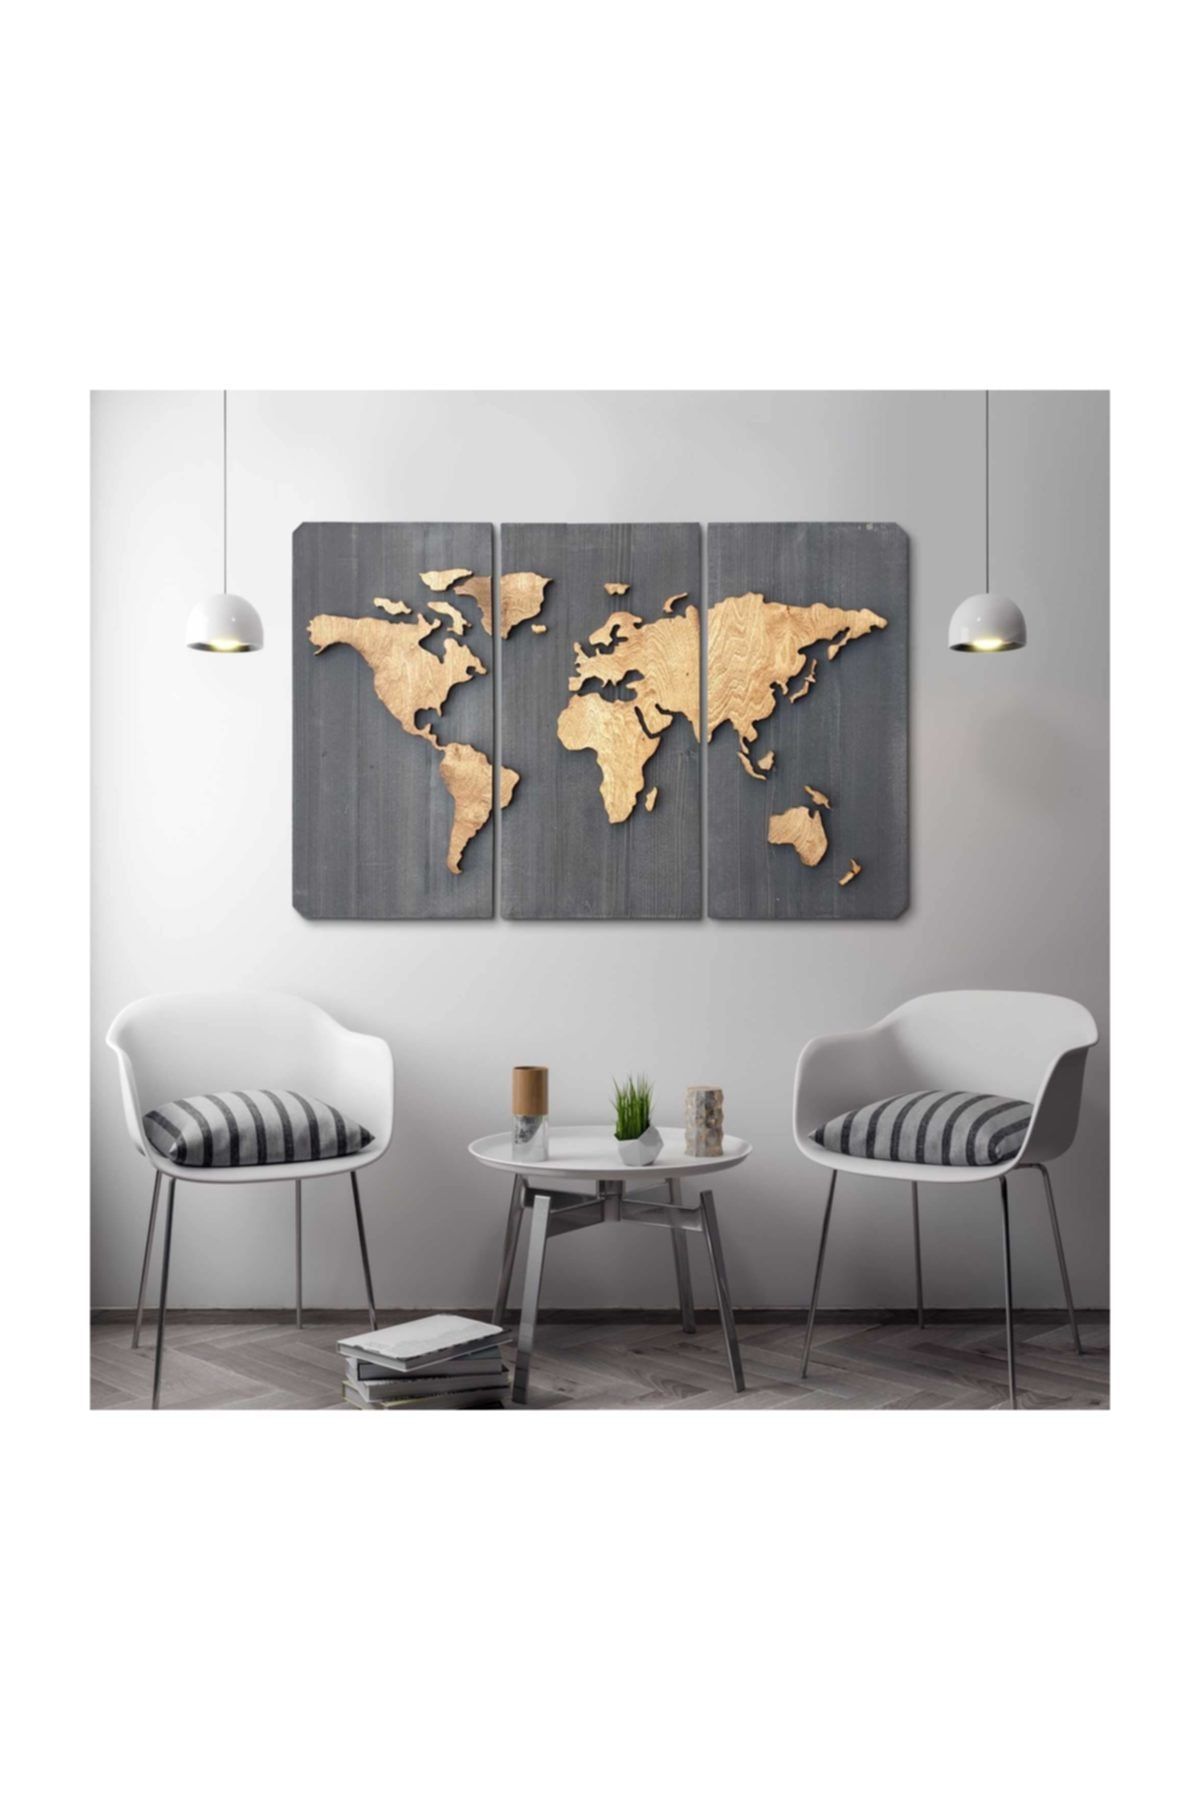 Woodboz World Map - Ahşap Dünya Haritası - Dekoratif Dünya Haritası - Dünya Haritası - Harita